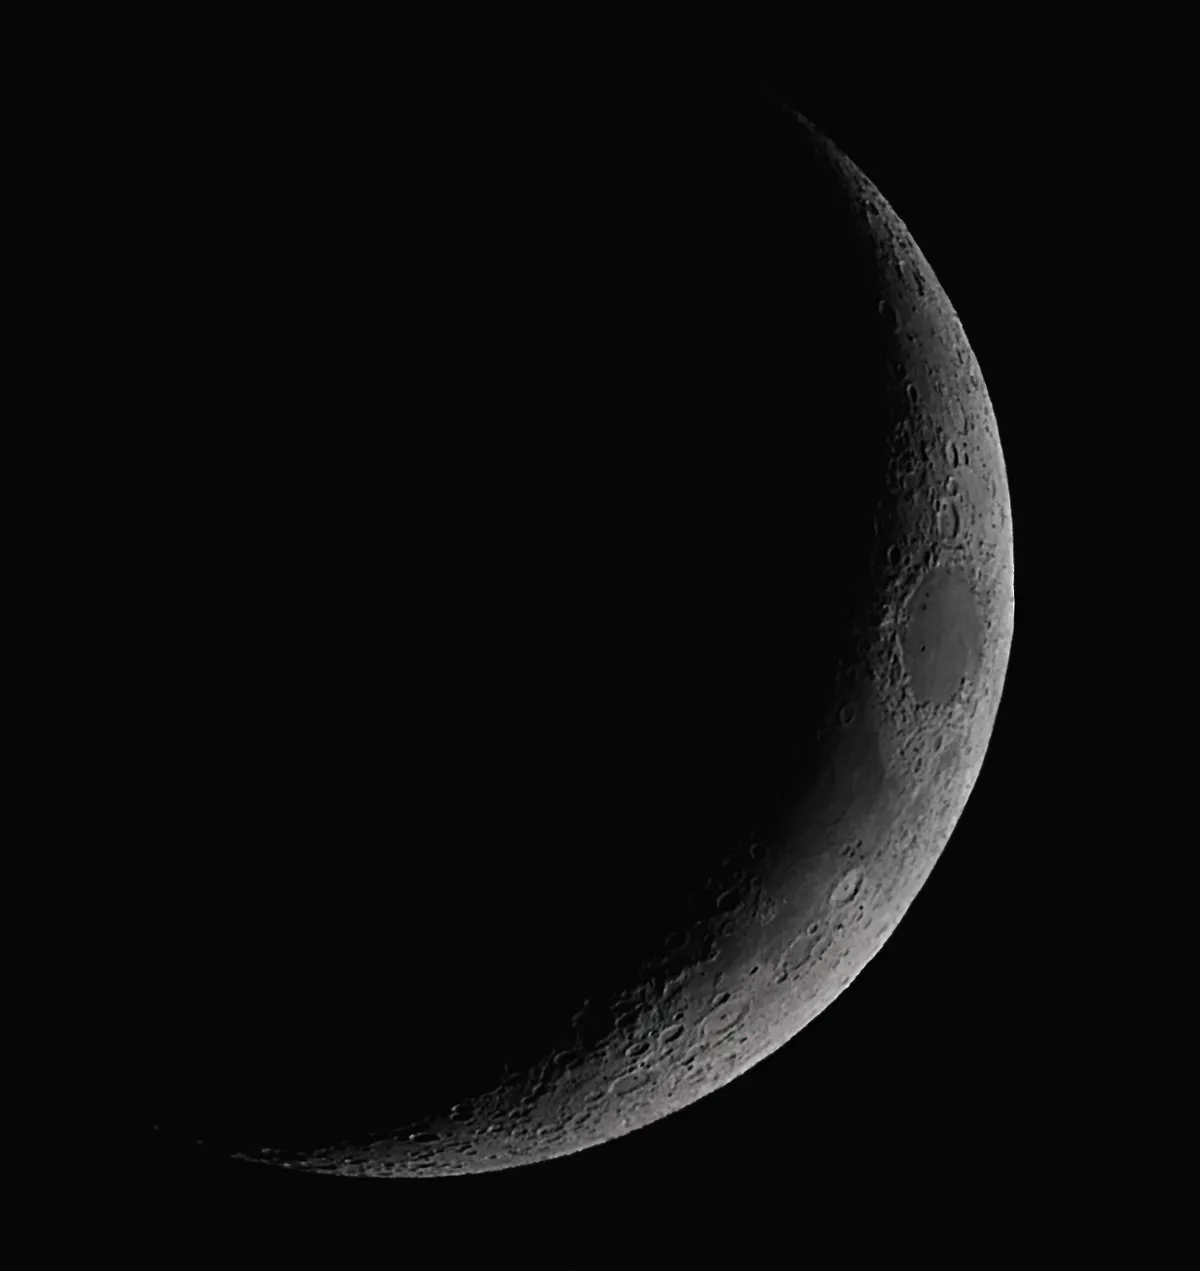 Crescent Moon by Paul Bailey, Chester, Equipment: Sky-watcher 200p newtonian reflector, EQ5 Mount, Microsoft Lifecam Studio HD